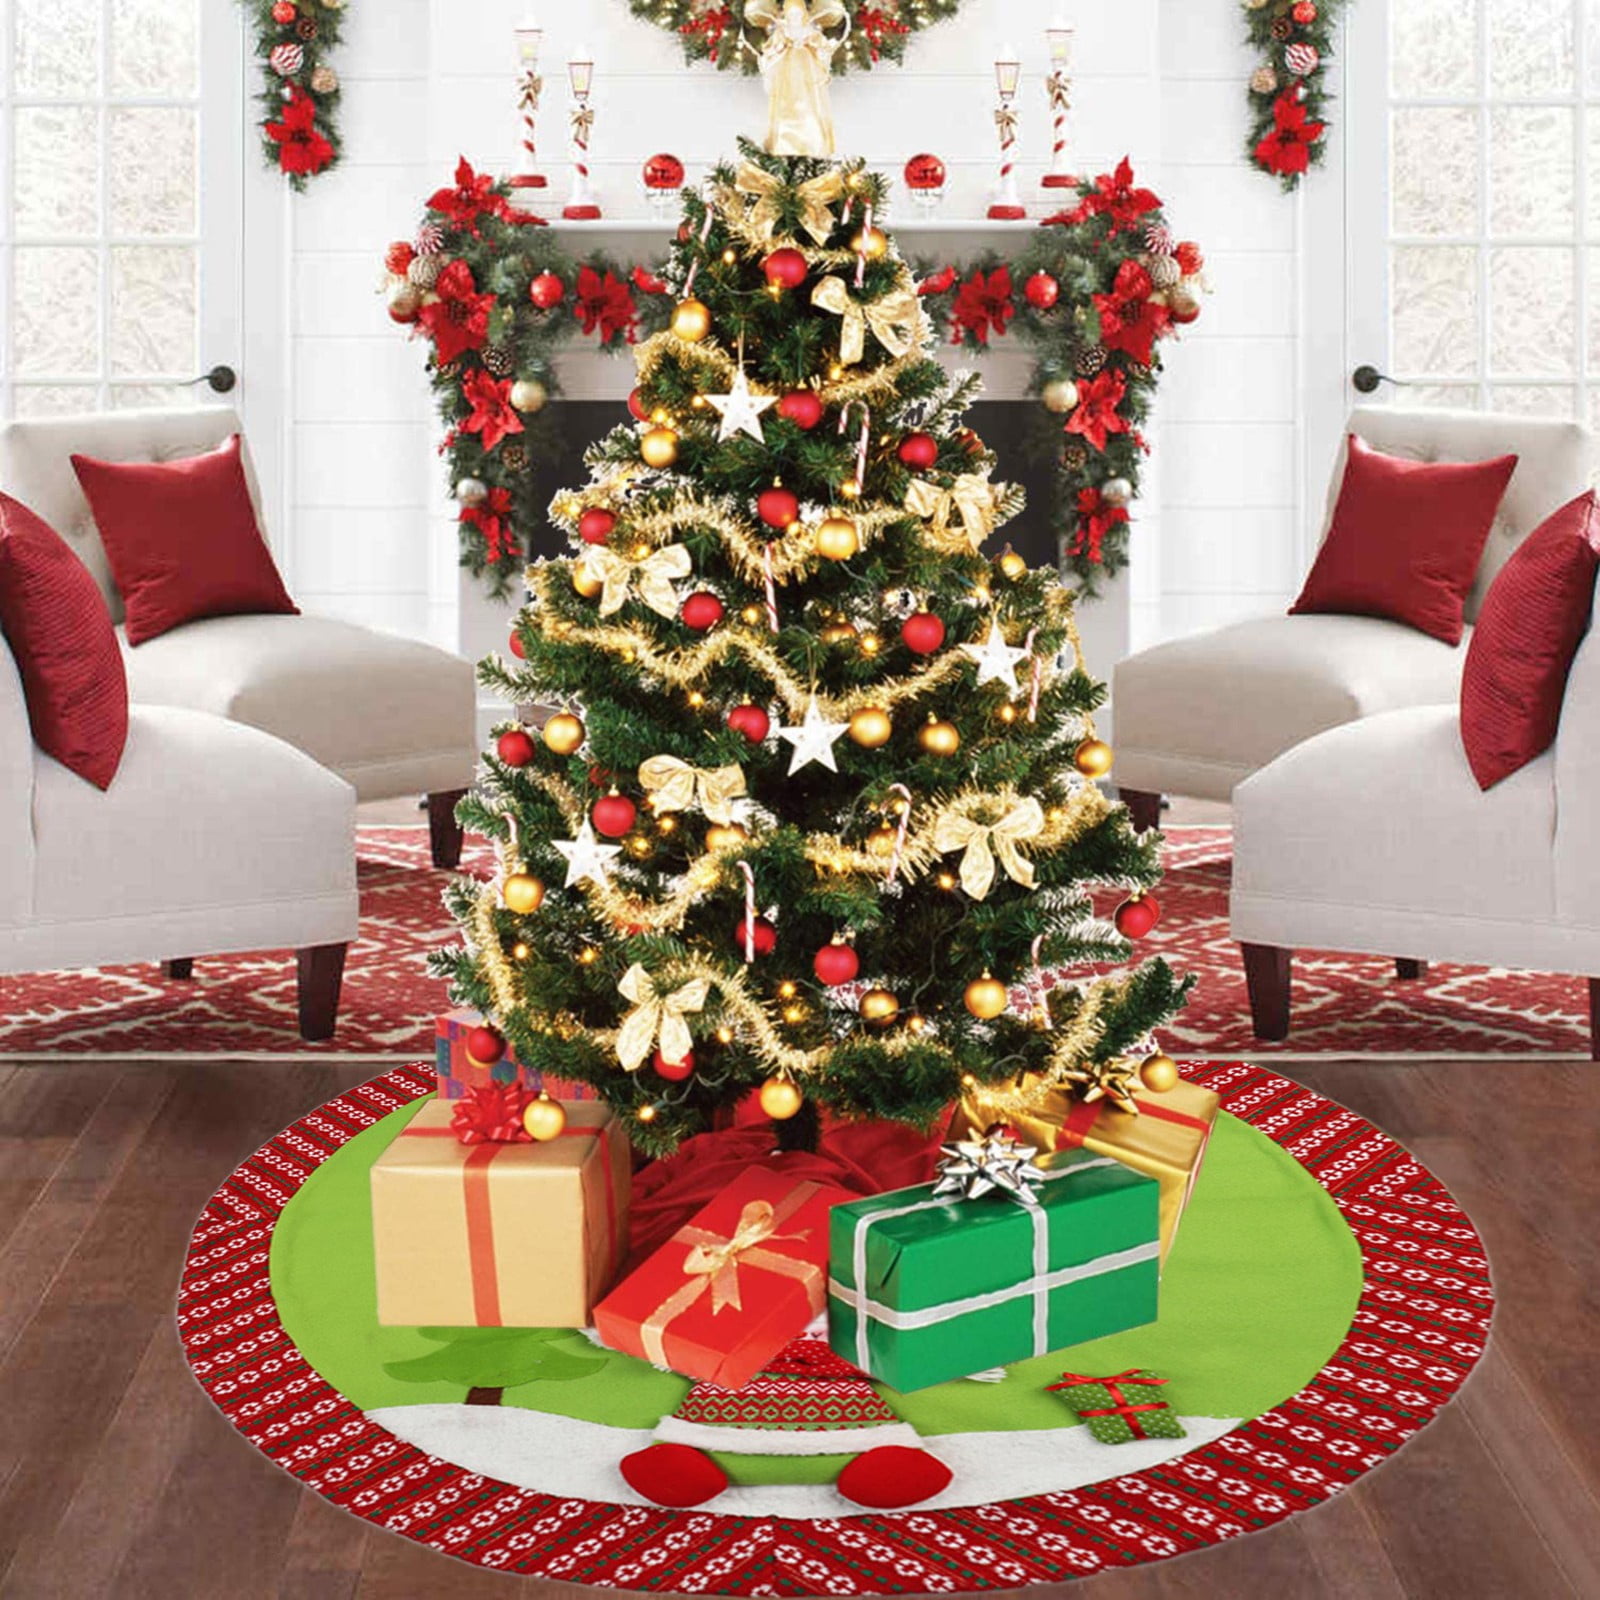 5Pcs Mini Christmas Tree Ornaments Home Party Xmas Decoration Gift 2019 